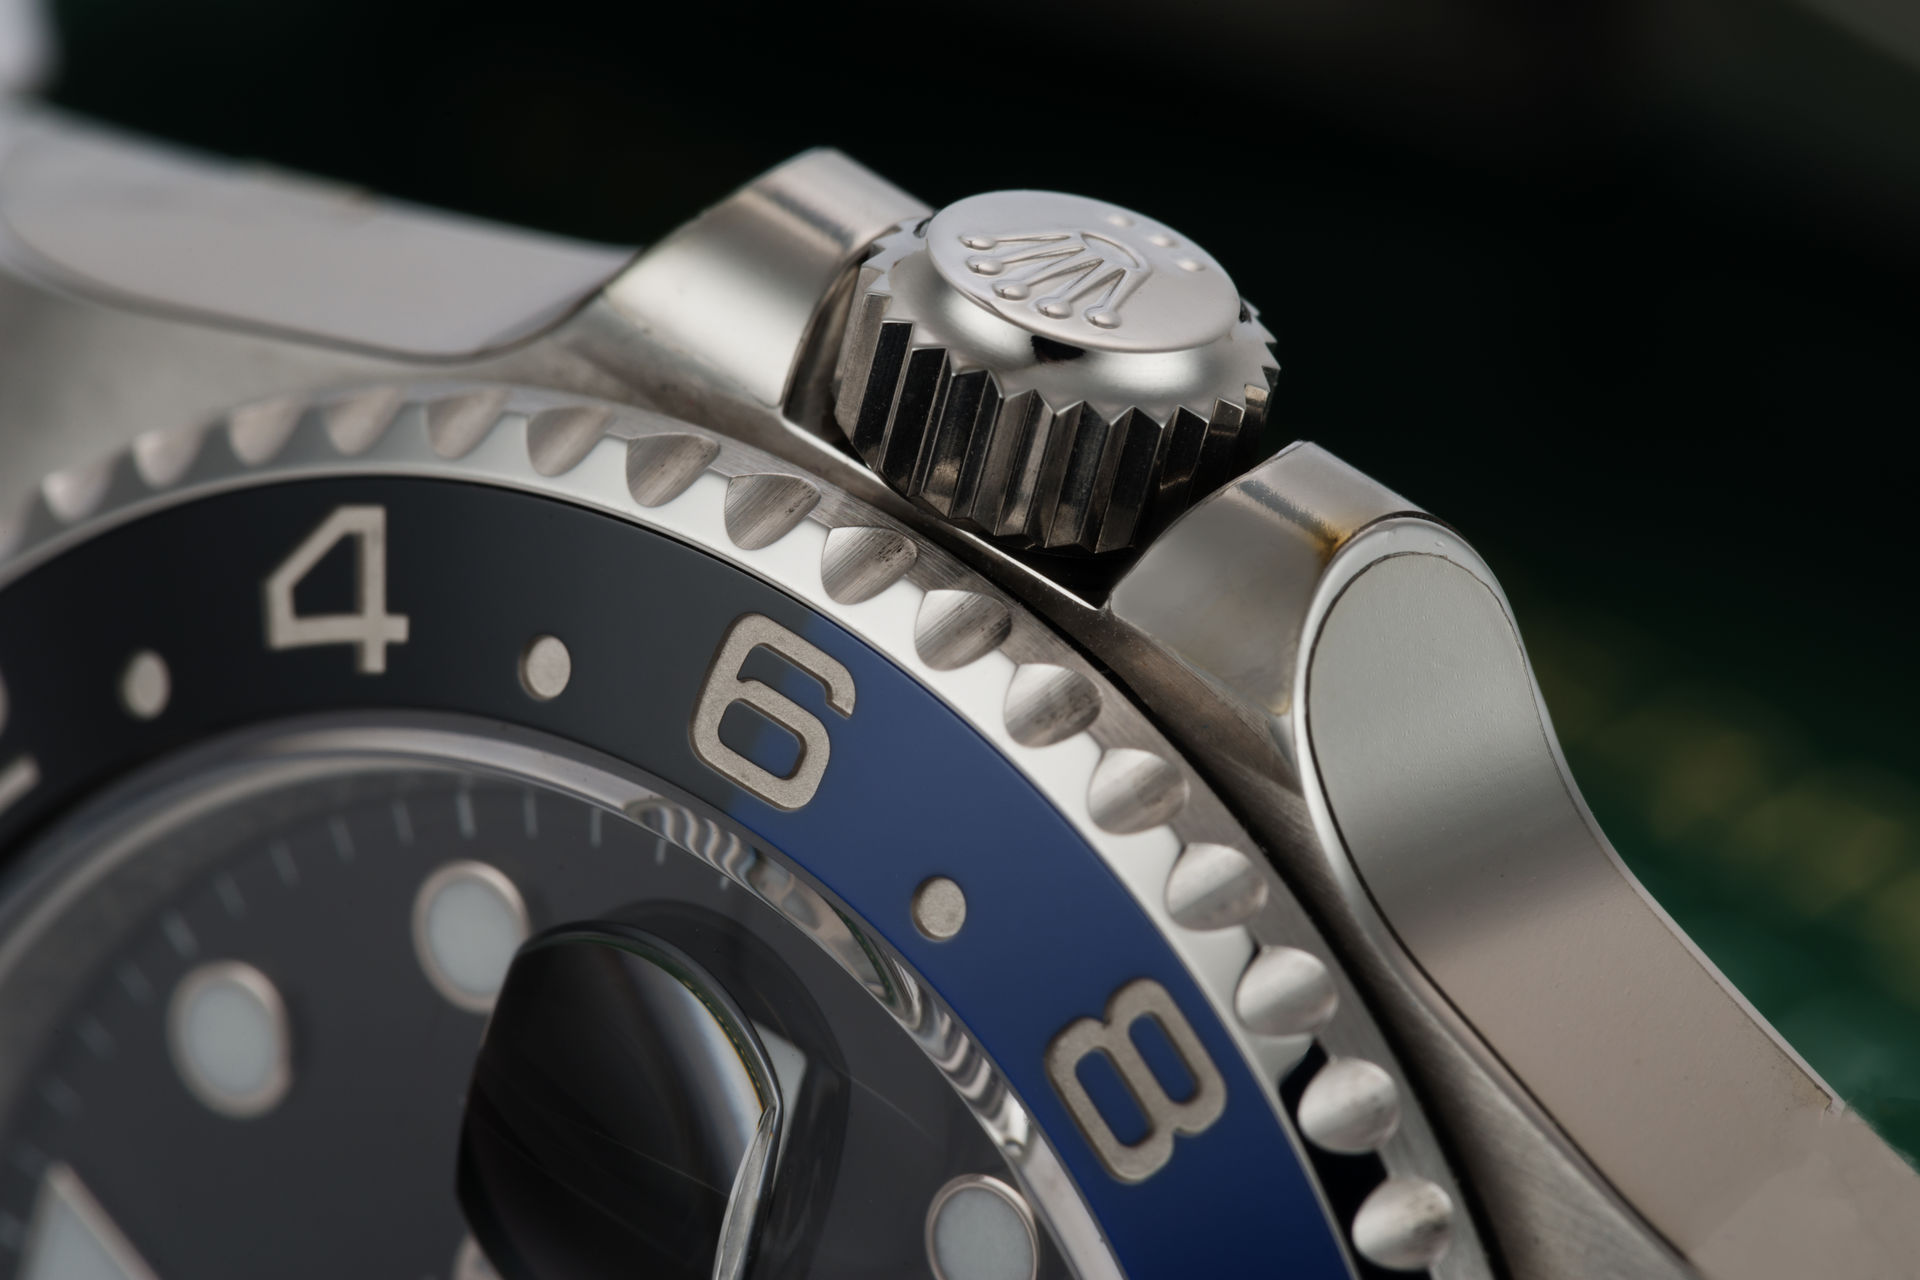 ref 116710BLNR | Brand New 5 Year Warranty | Rolex GMT-Master II